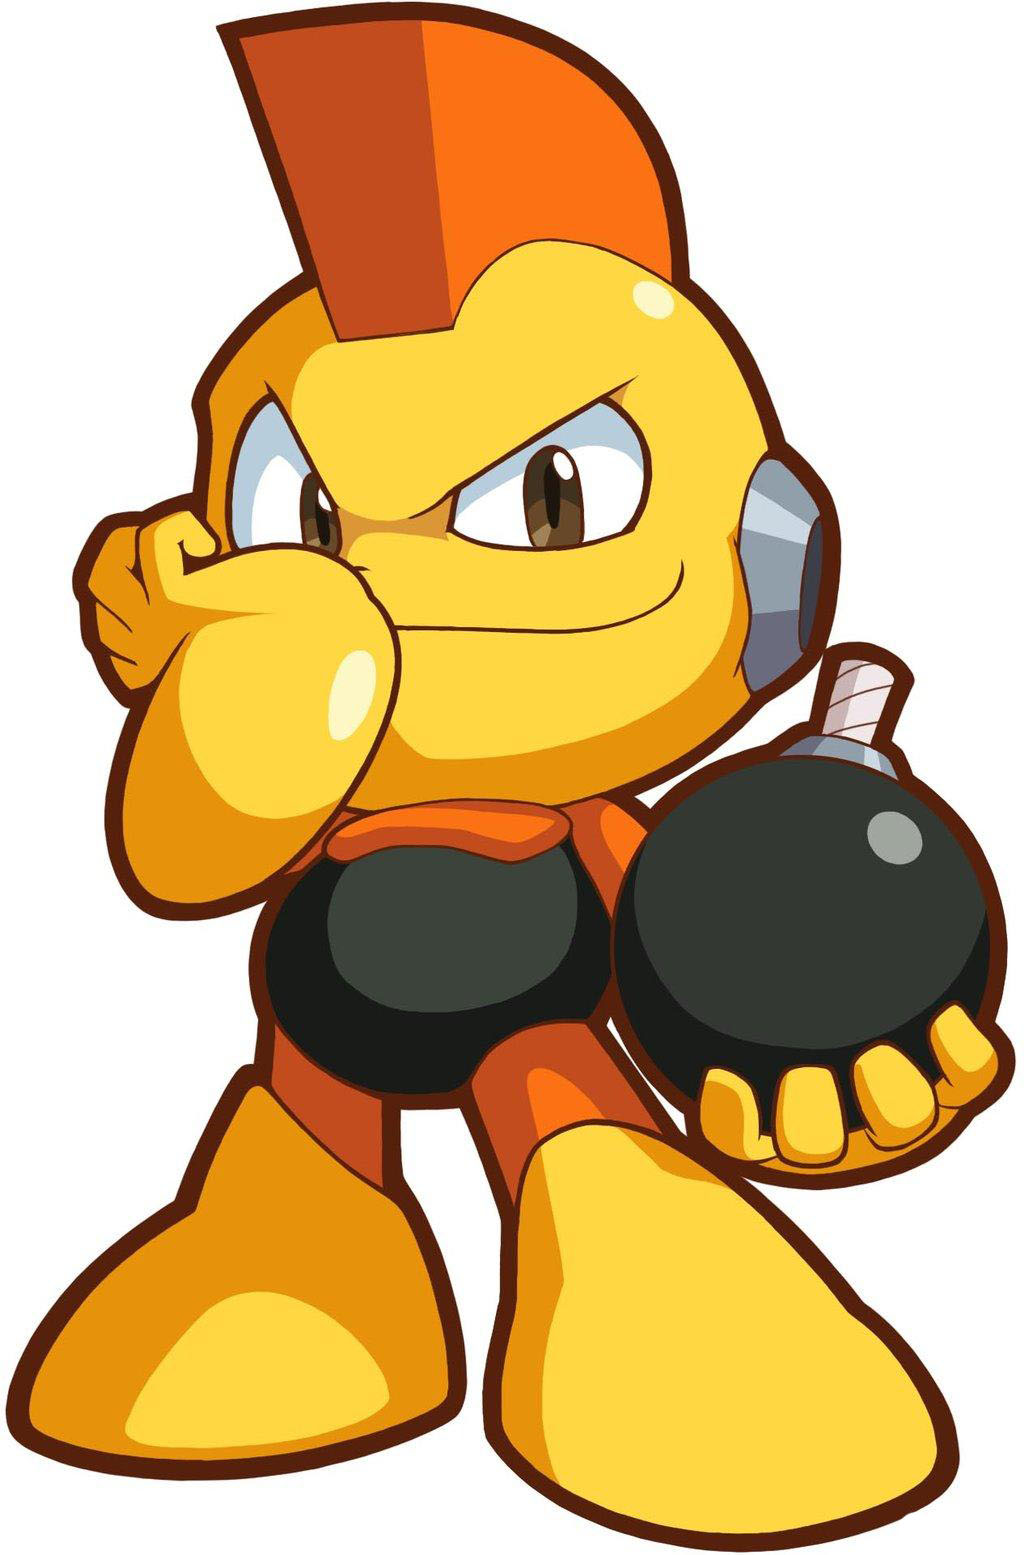 Bomb Man from MegaMan Game Art1024 x 1555